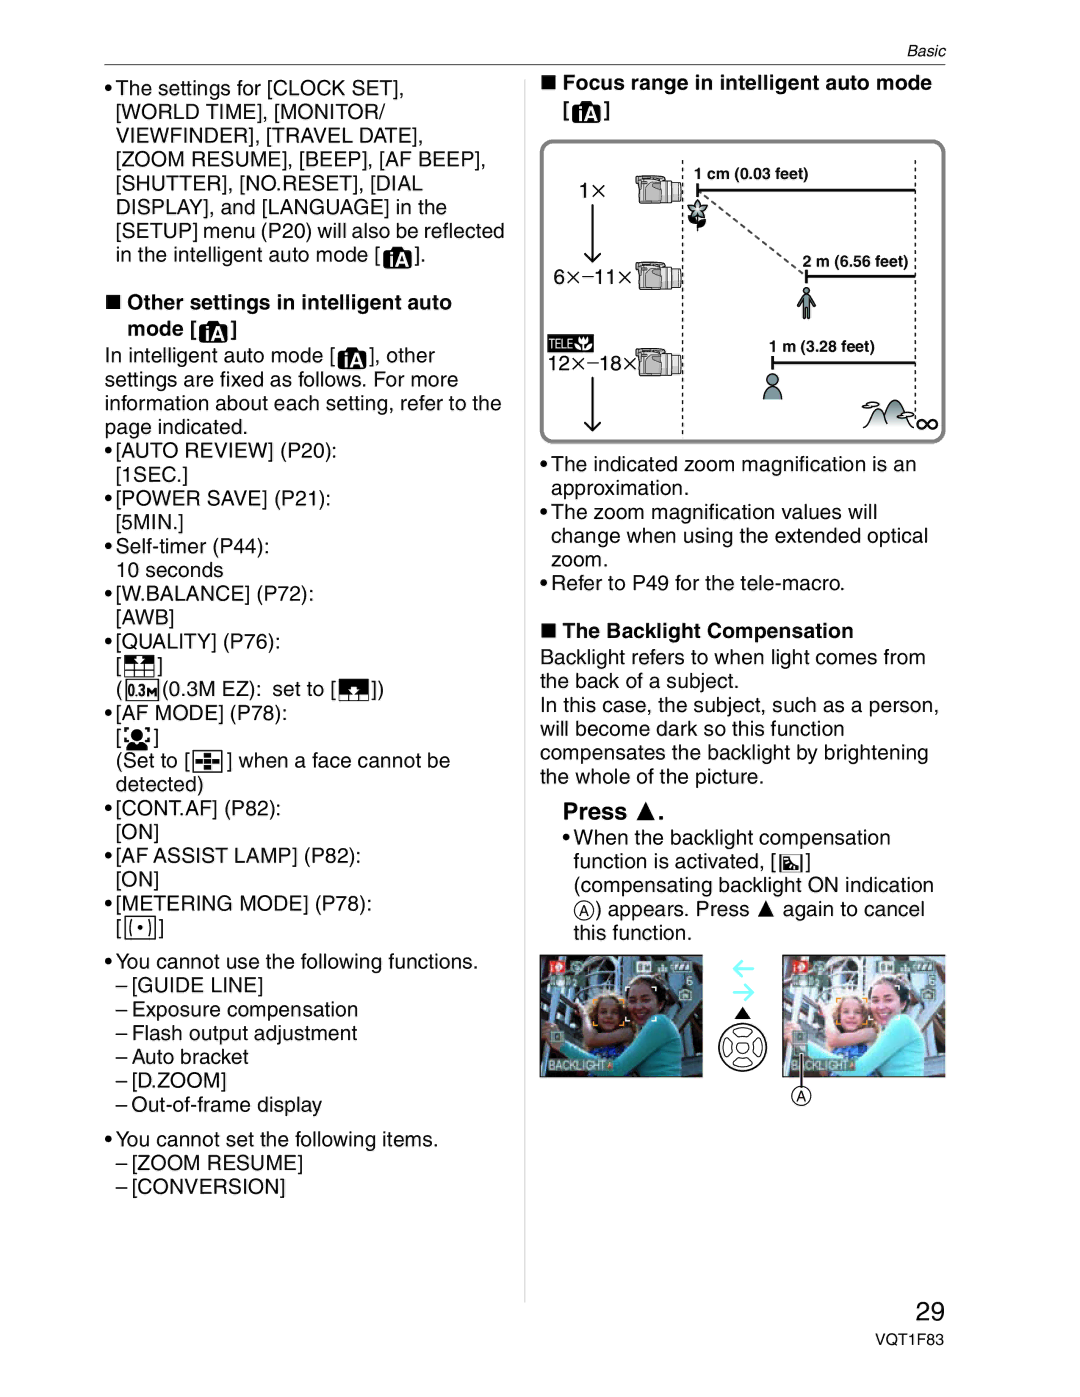 Panasonic DMC-FZ18 operating instructions Other settings in intelligent auto Mode, Focus range in intelligent auto mode 